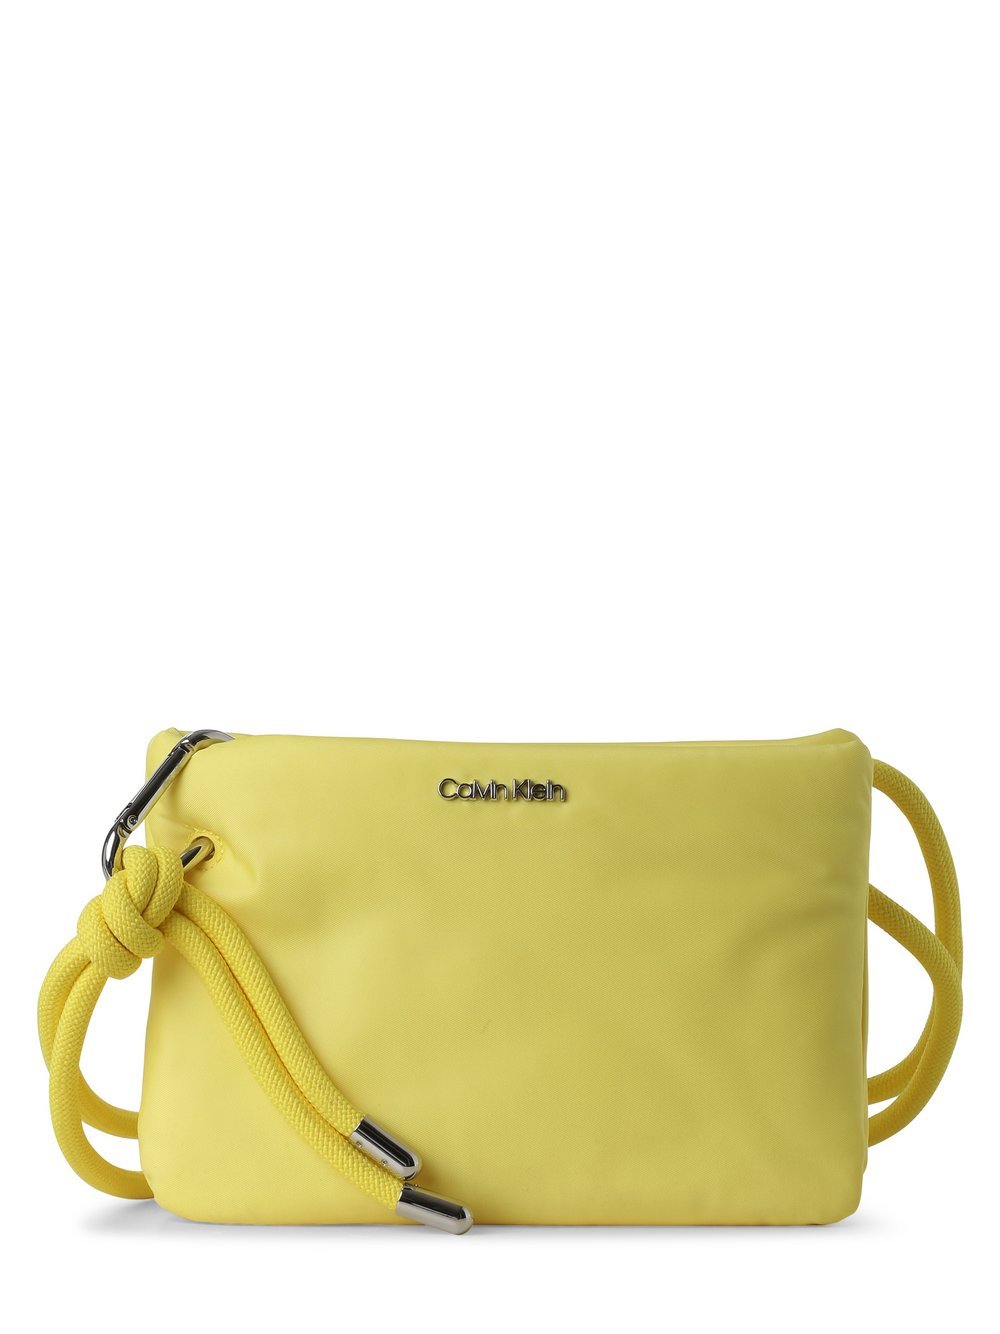 Calvin Klein - Damska torebka na ramię, żółty